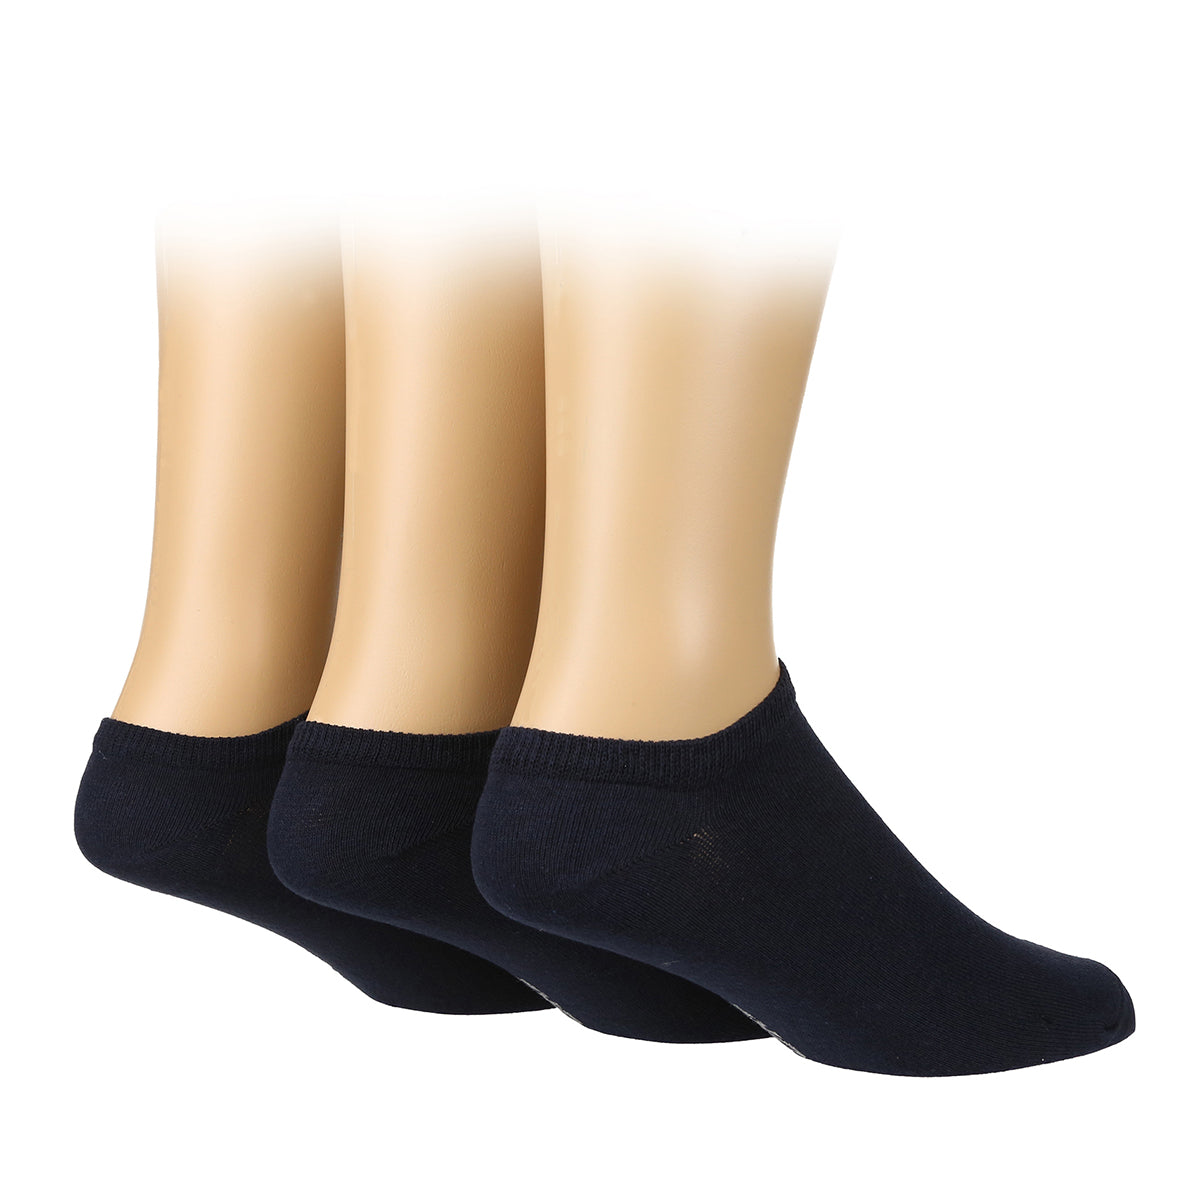 Men's Plain Trainer Socks - 3 Pairs